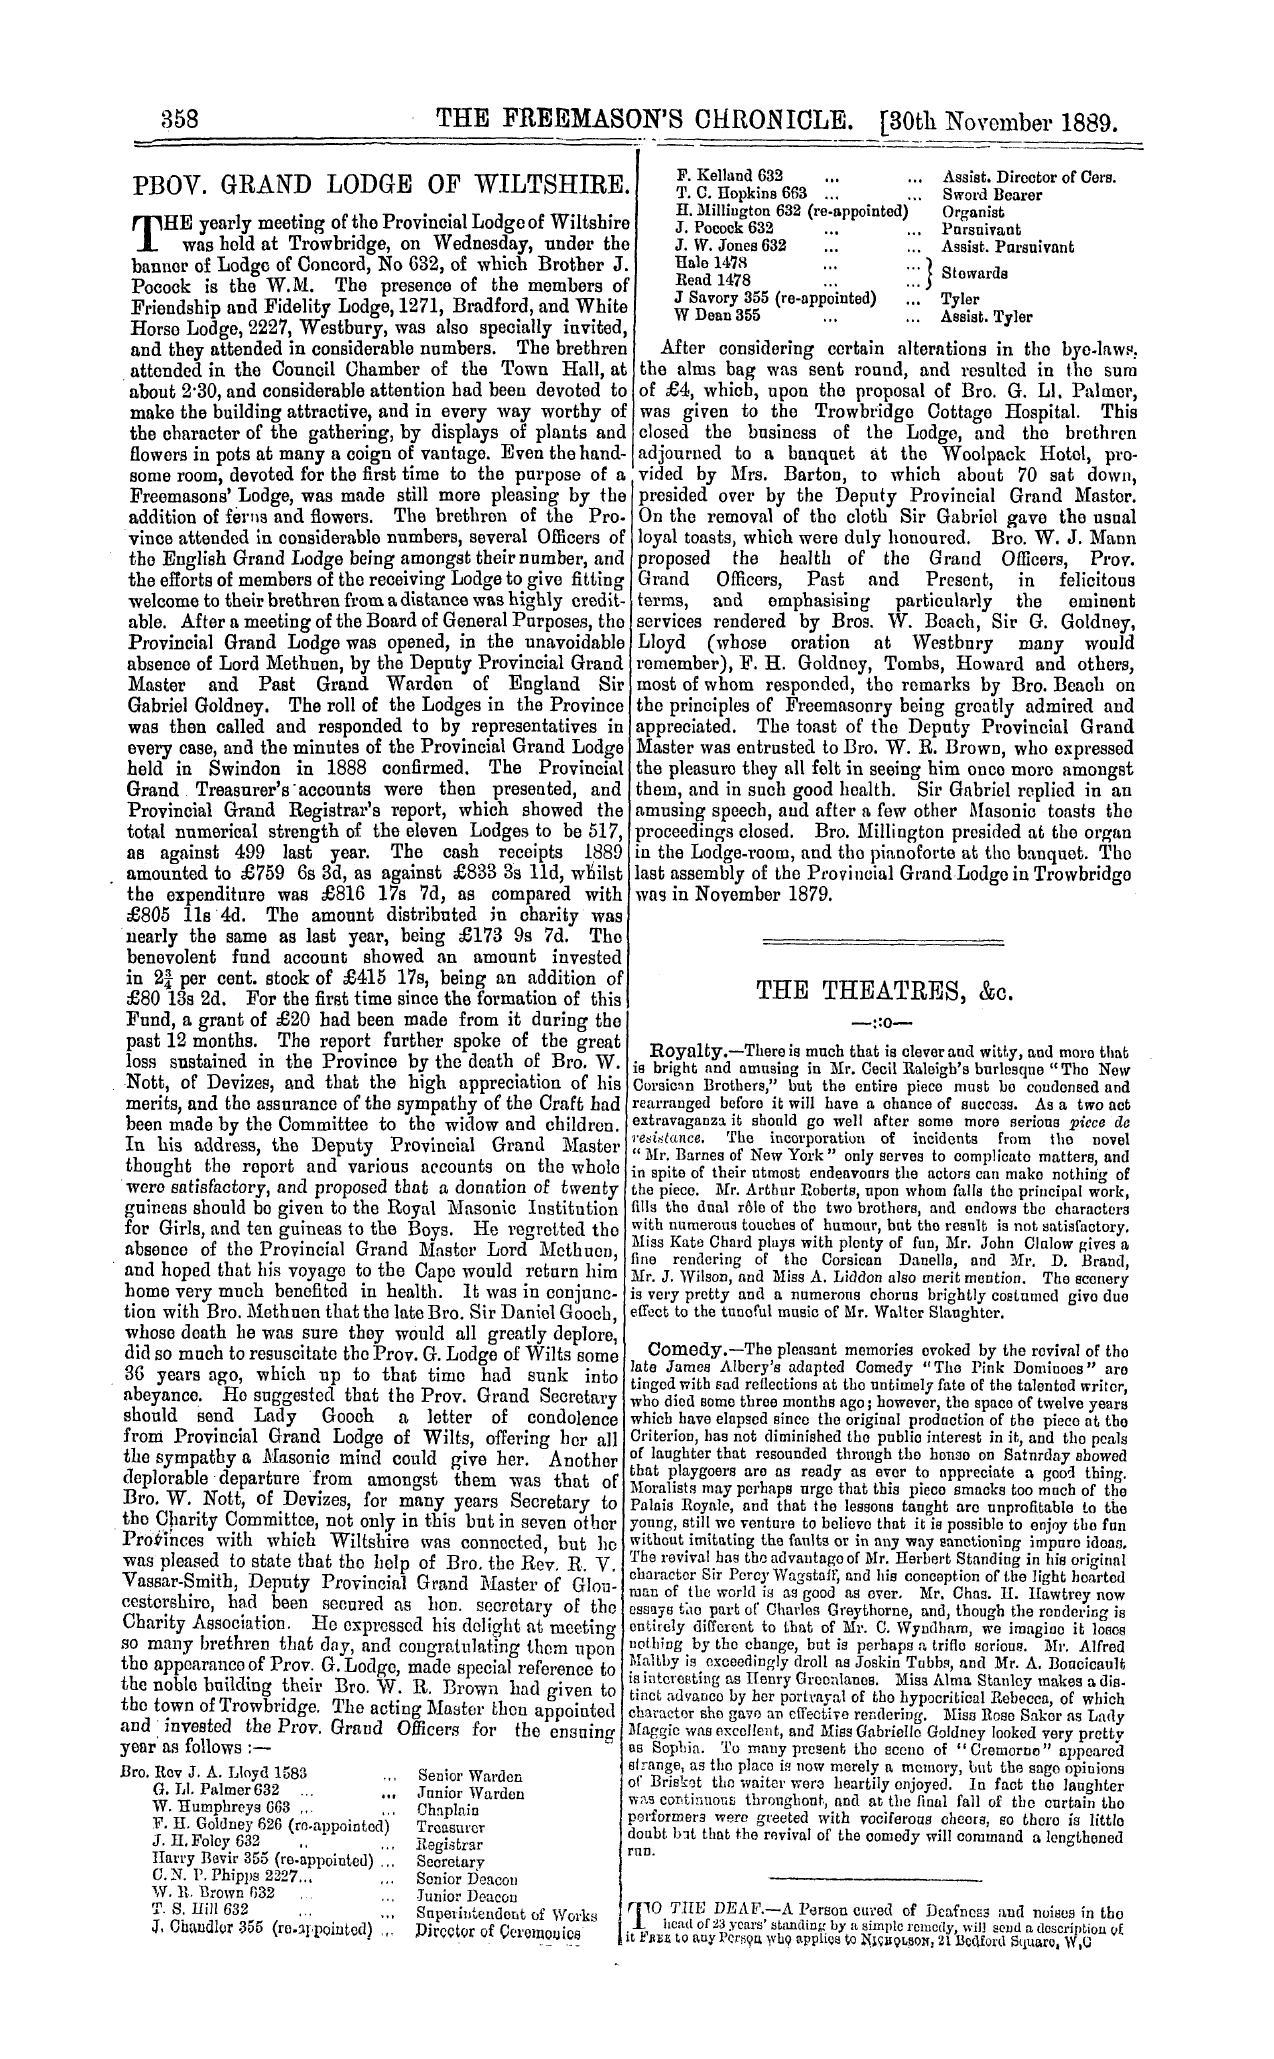 The Freemason's Chronicle: 1889-11-30 - The Theatres, &C.